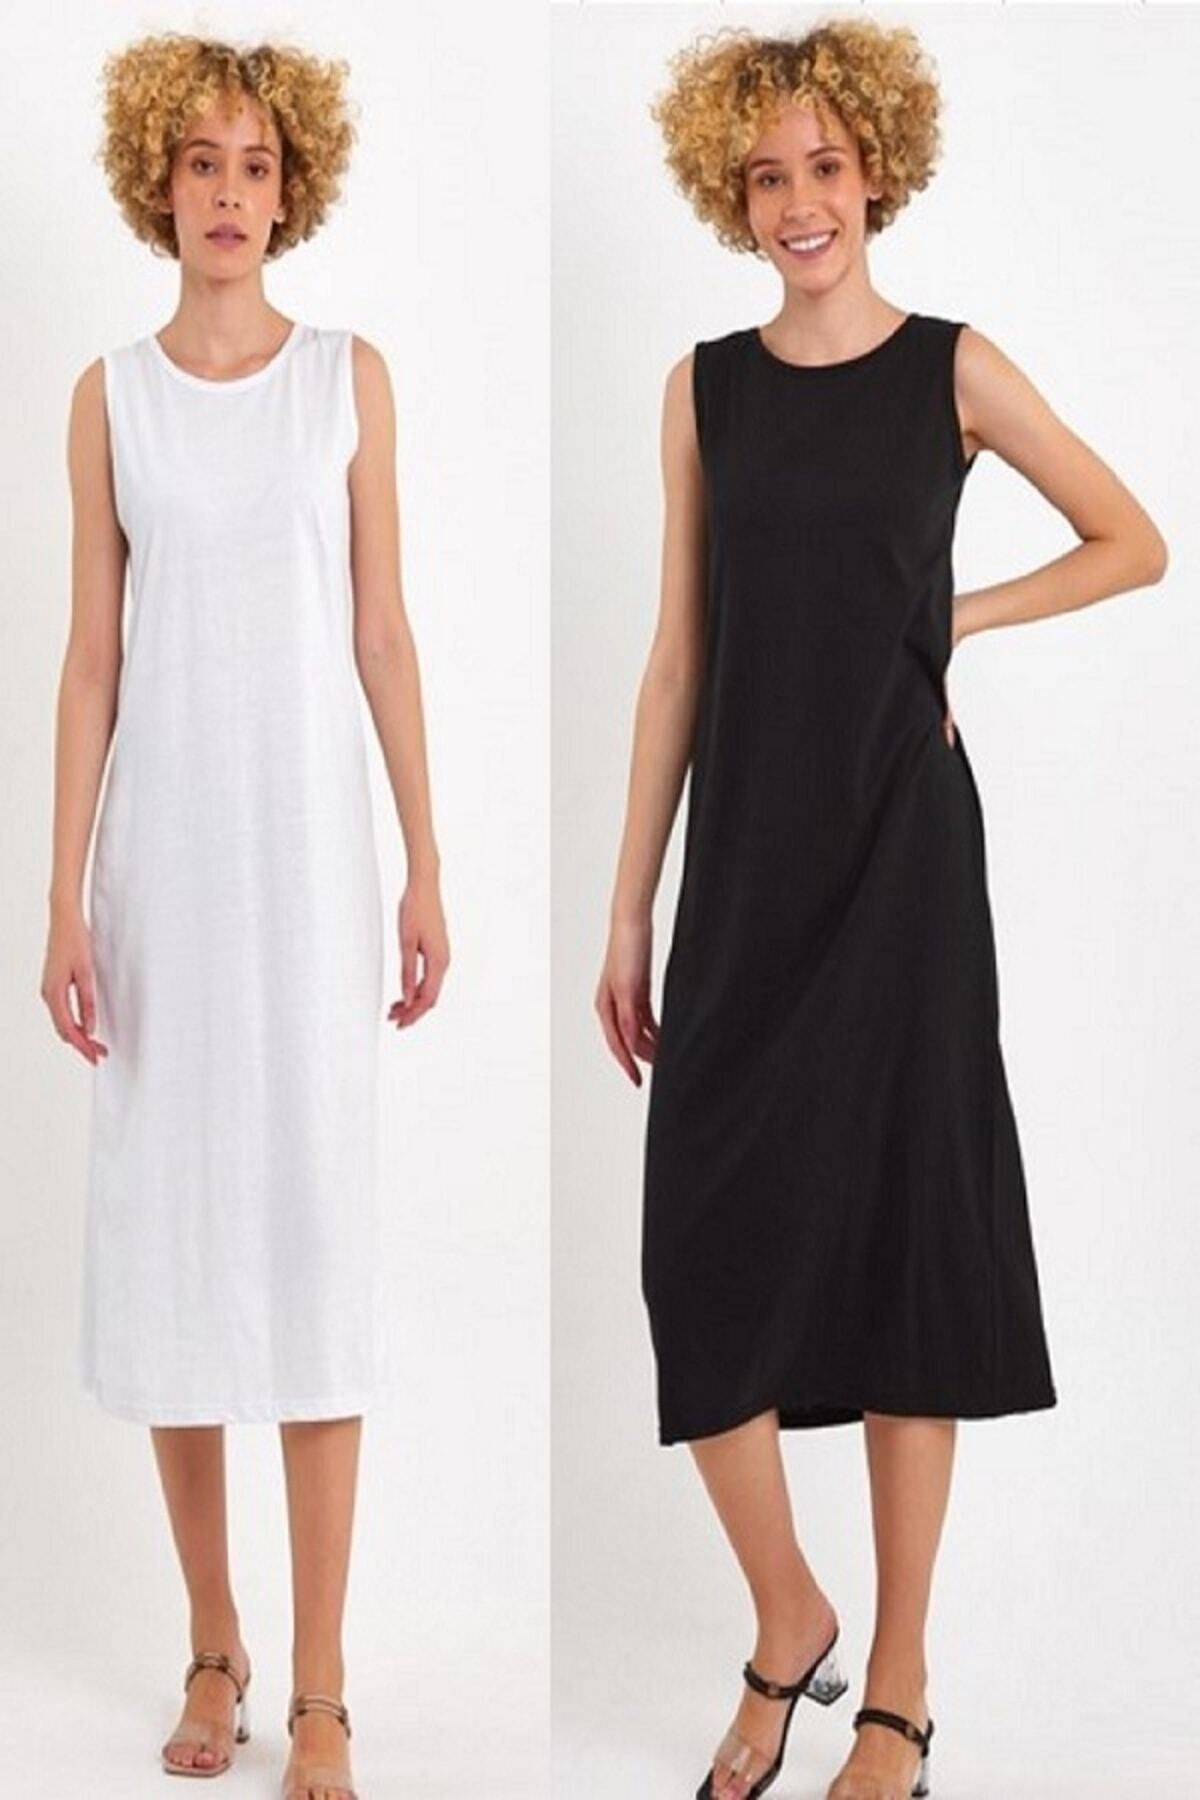 HUMA TEKSTİL Kolsuz Elbise Astarı Içlik Siyah Beyaz 2 Li Paket Jüpon Kombinezon